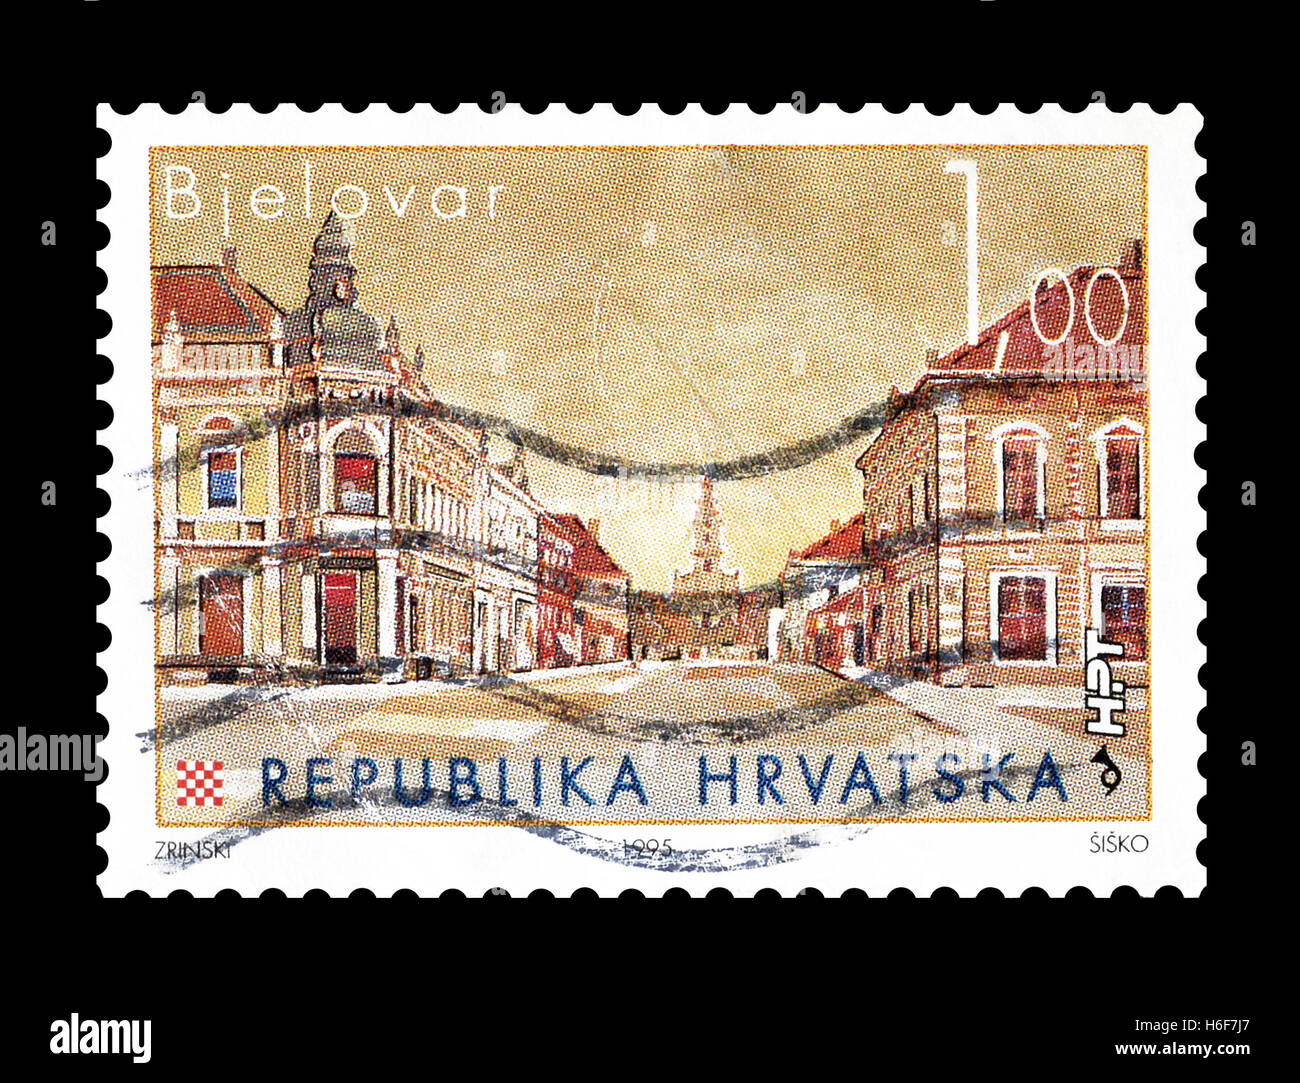 Croatia stamp 1995 Stock Photo